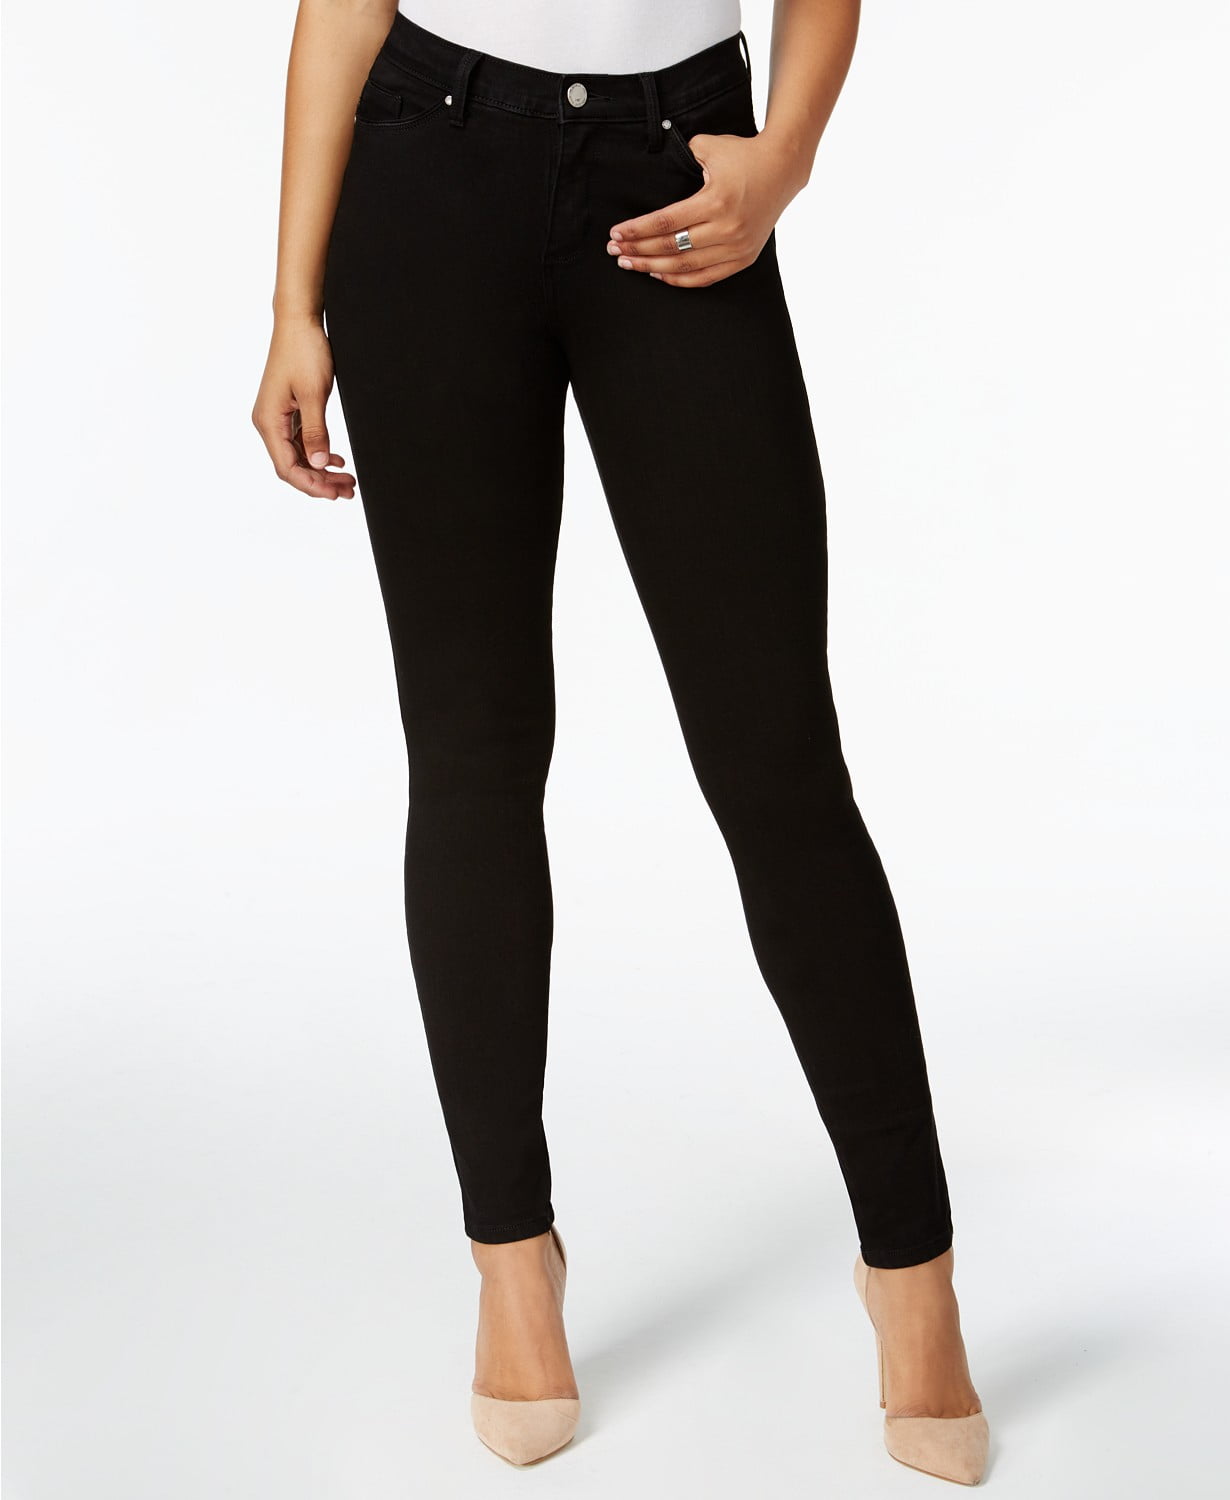 Lee Platinum Petite 360 Stretch Skinny Jeans Black 10P - Walmart.com ...